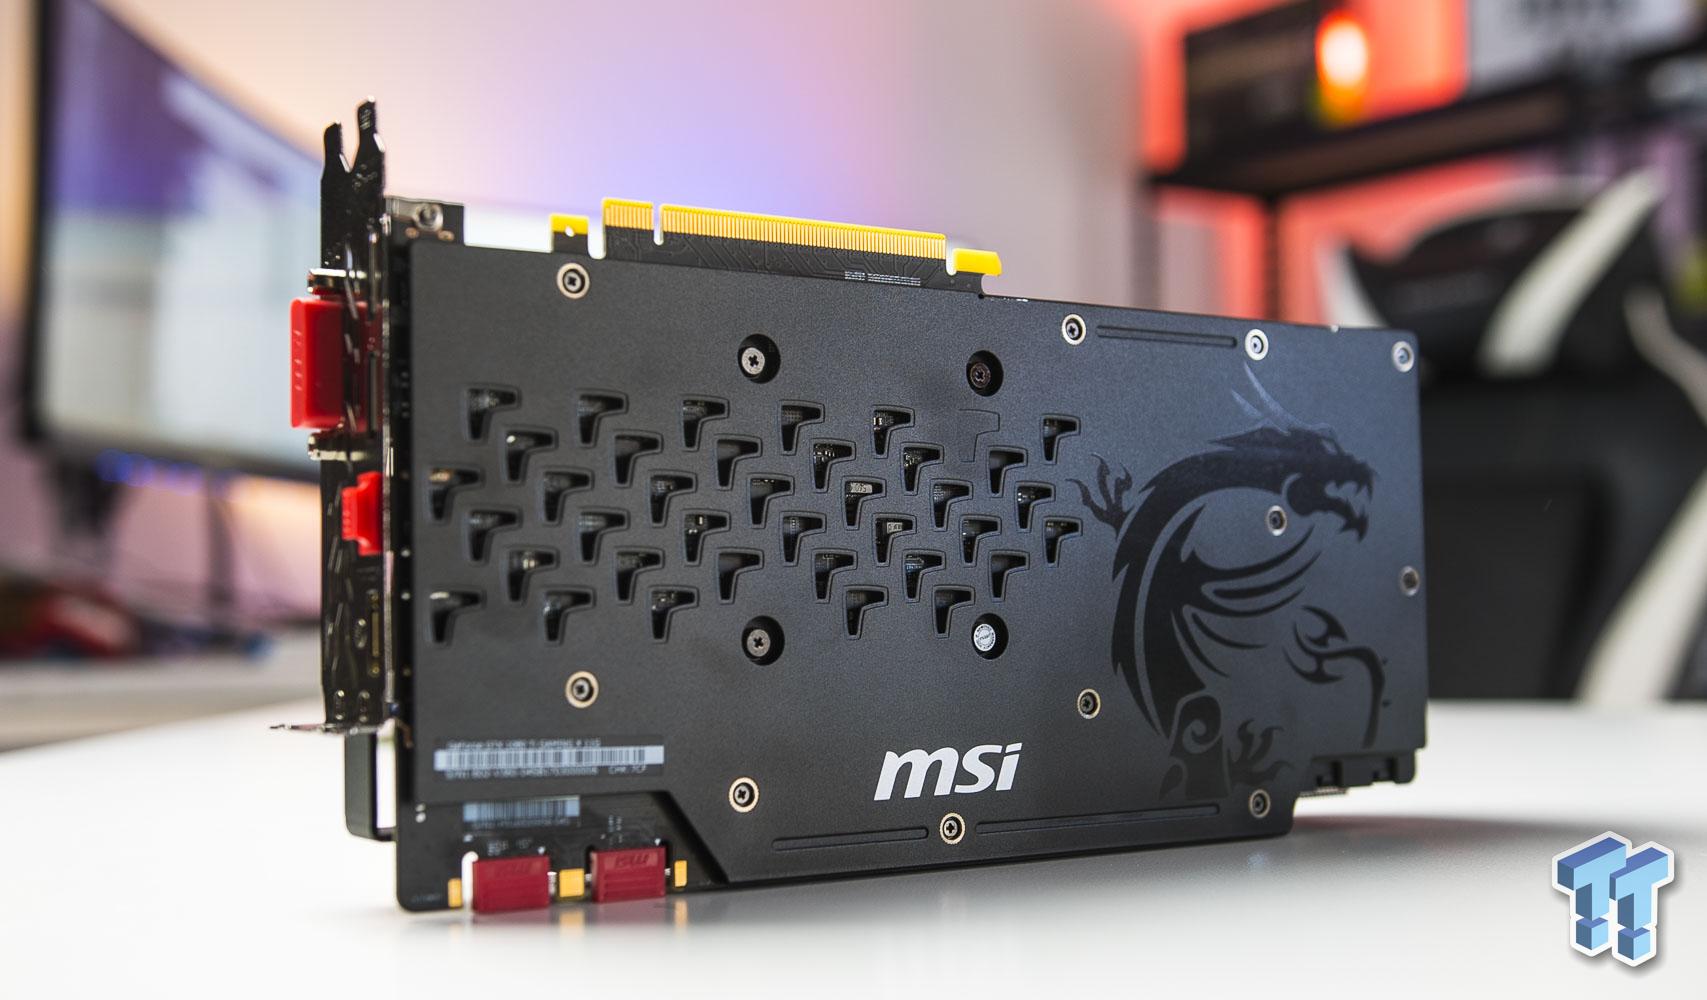 MSI GeForce GTX 1080 Ti Gaming X 11G Review - The Best! | TweakTown